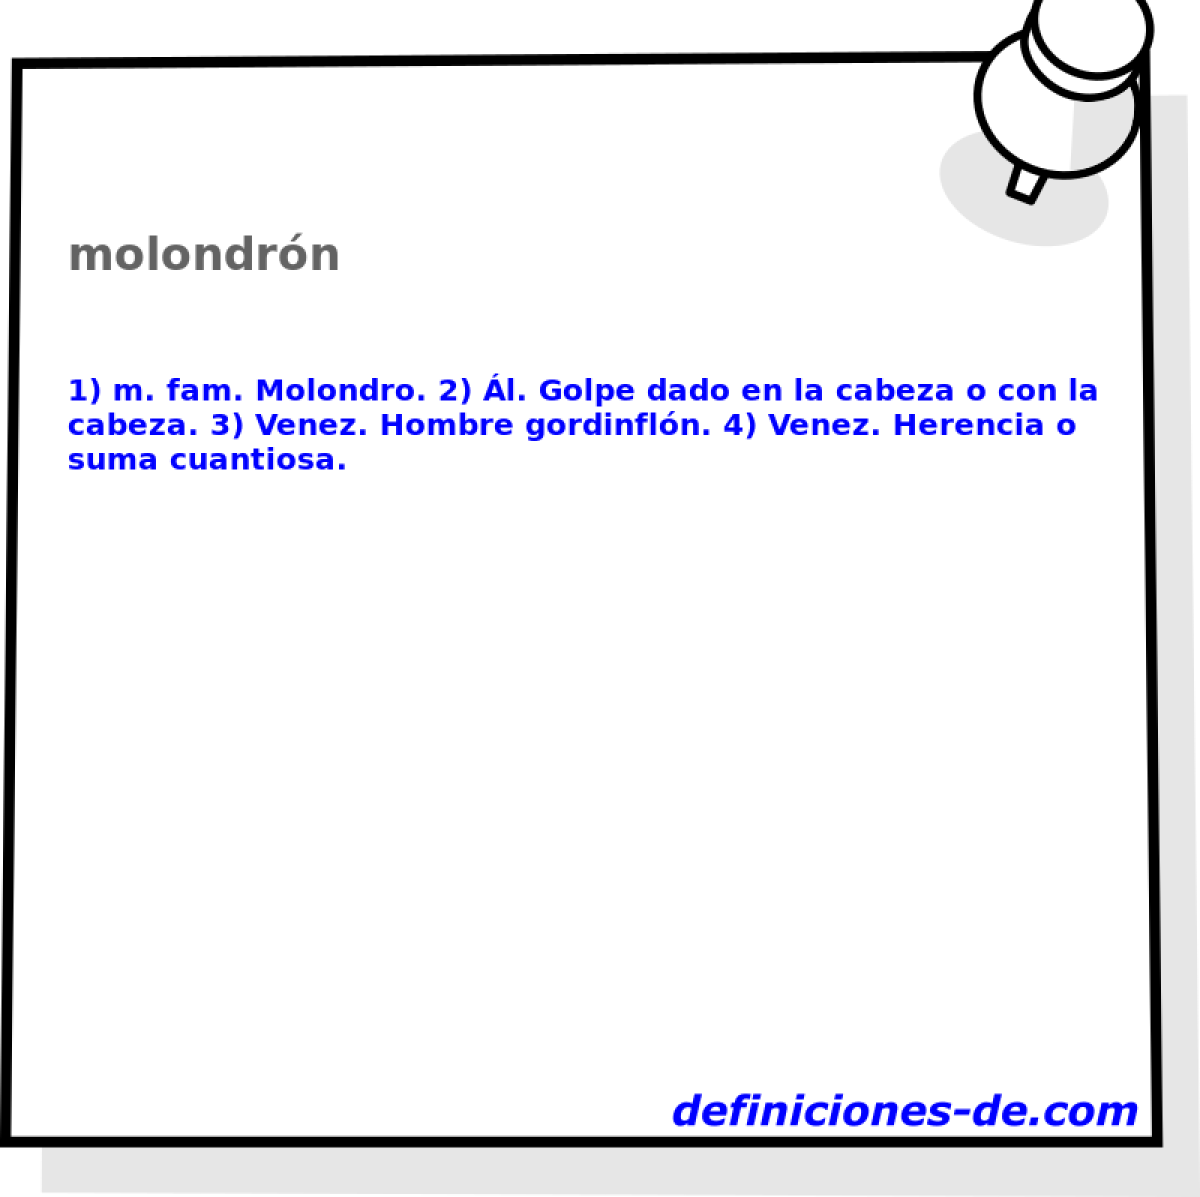 molondrn 